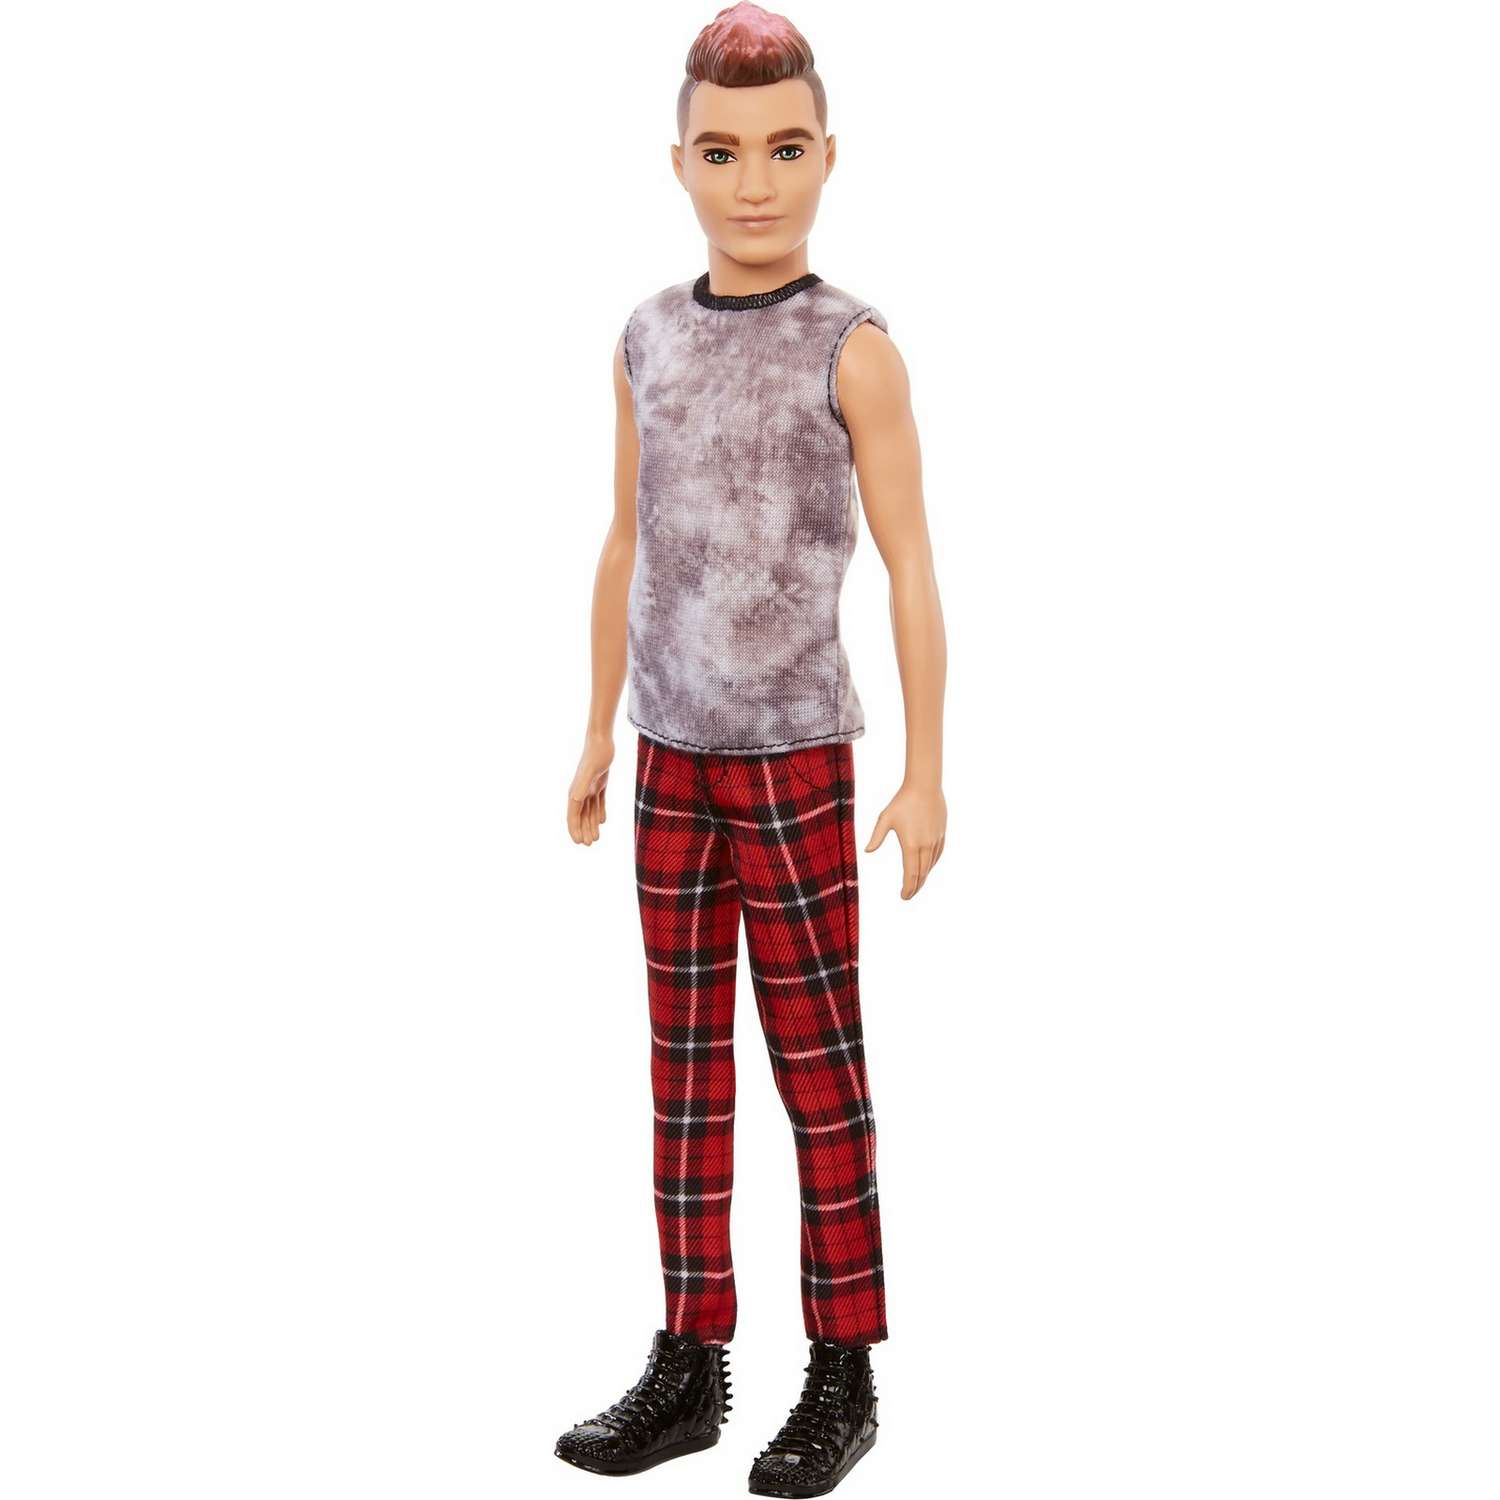 Кукла Barbie Игра с модой Кен 176 GVY29 DWK44 - фото 1